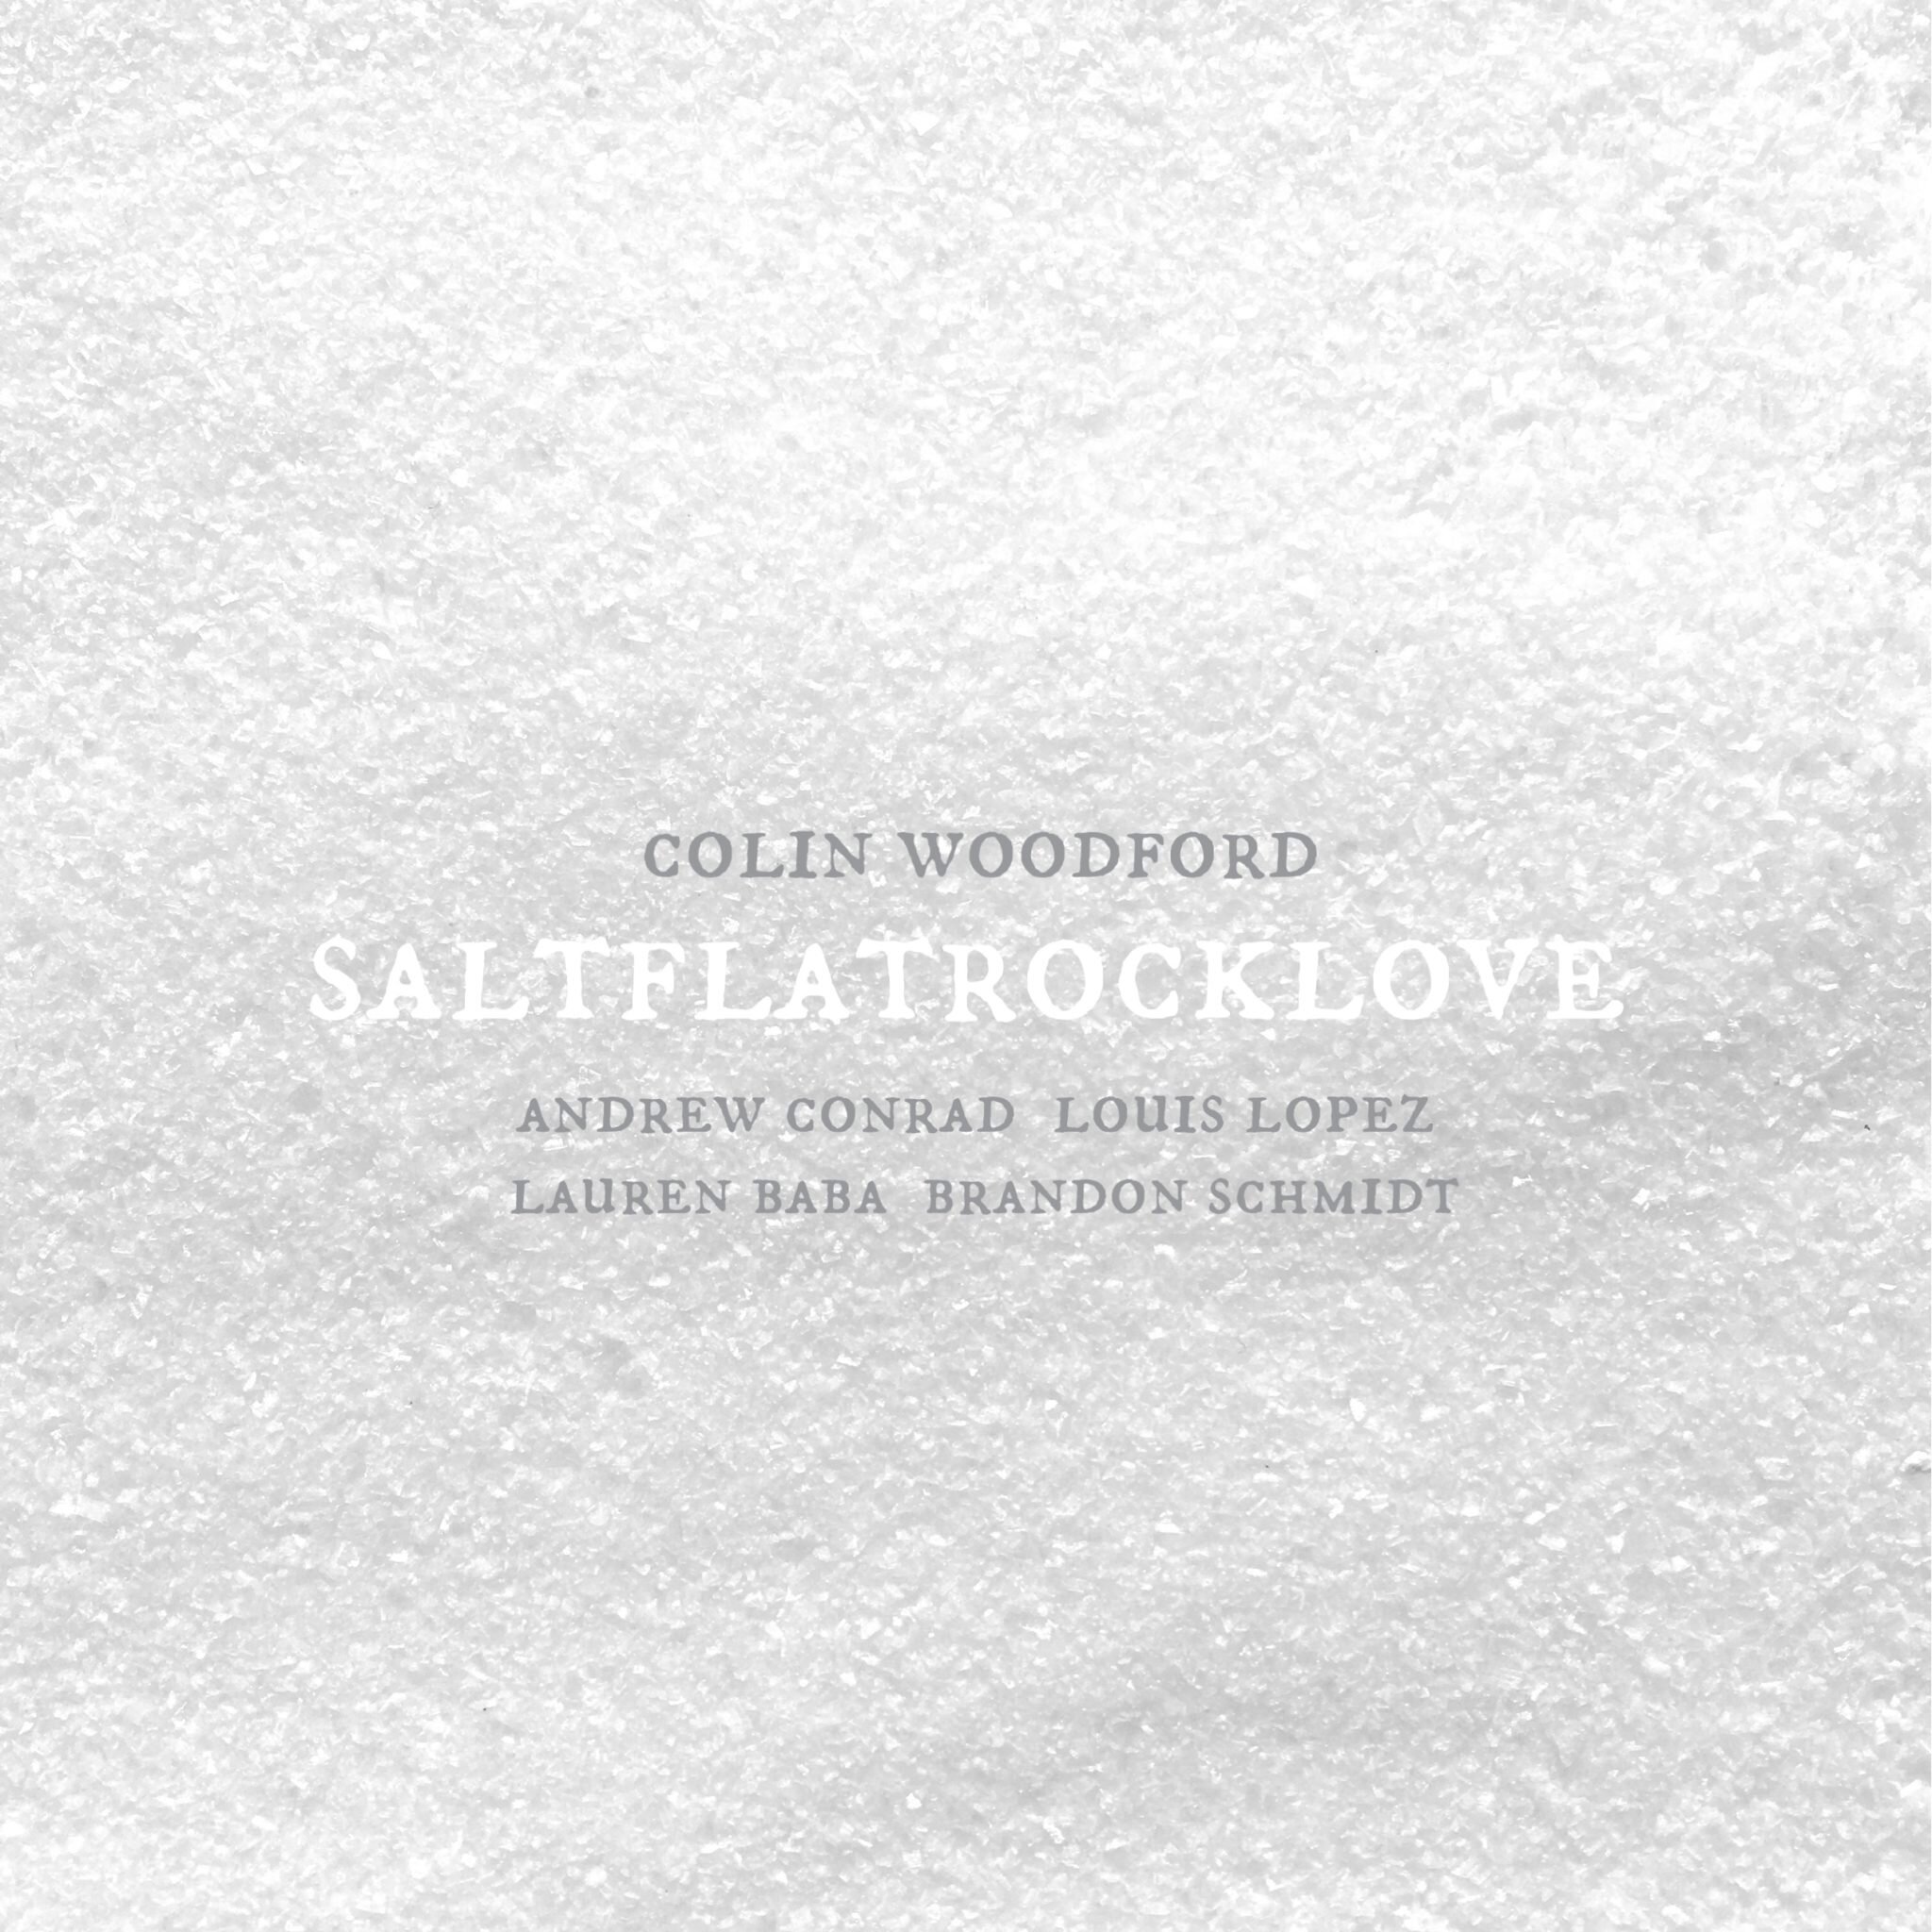 salt-flat-rock-love-album-art